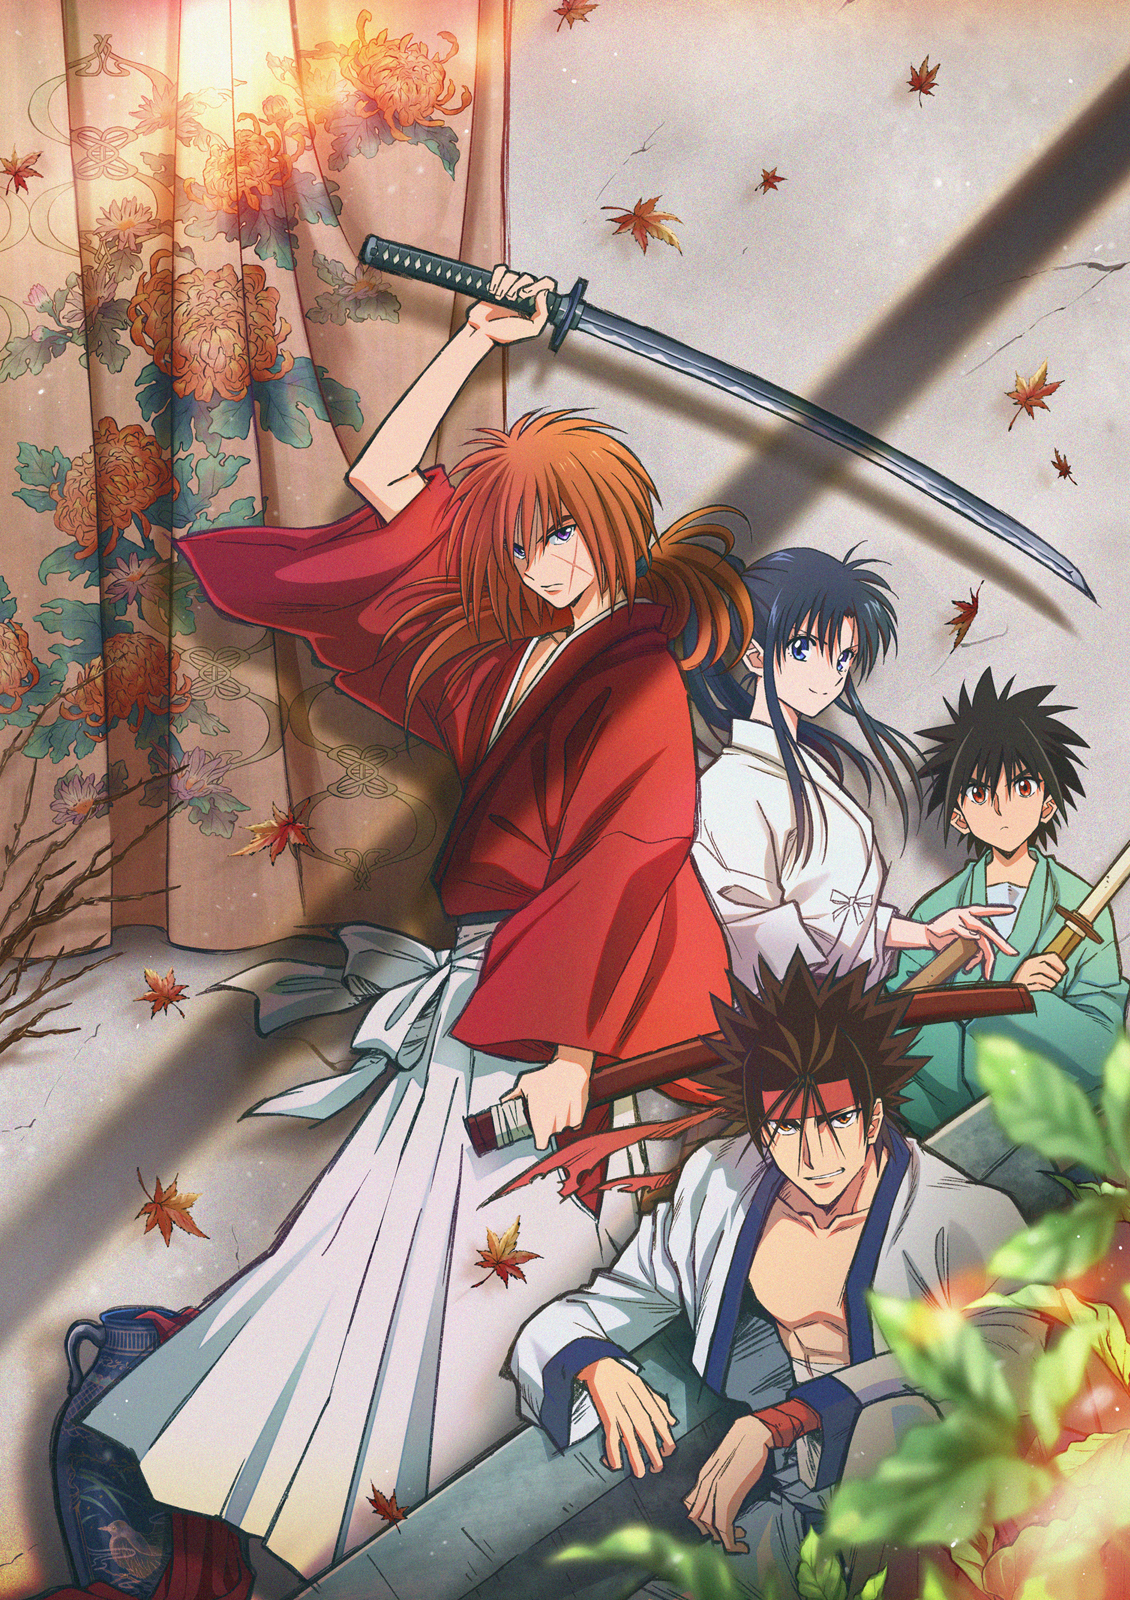 Rurouni Kenshin Beauty on the Run - Watch on Crunchyroll